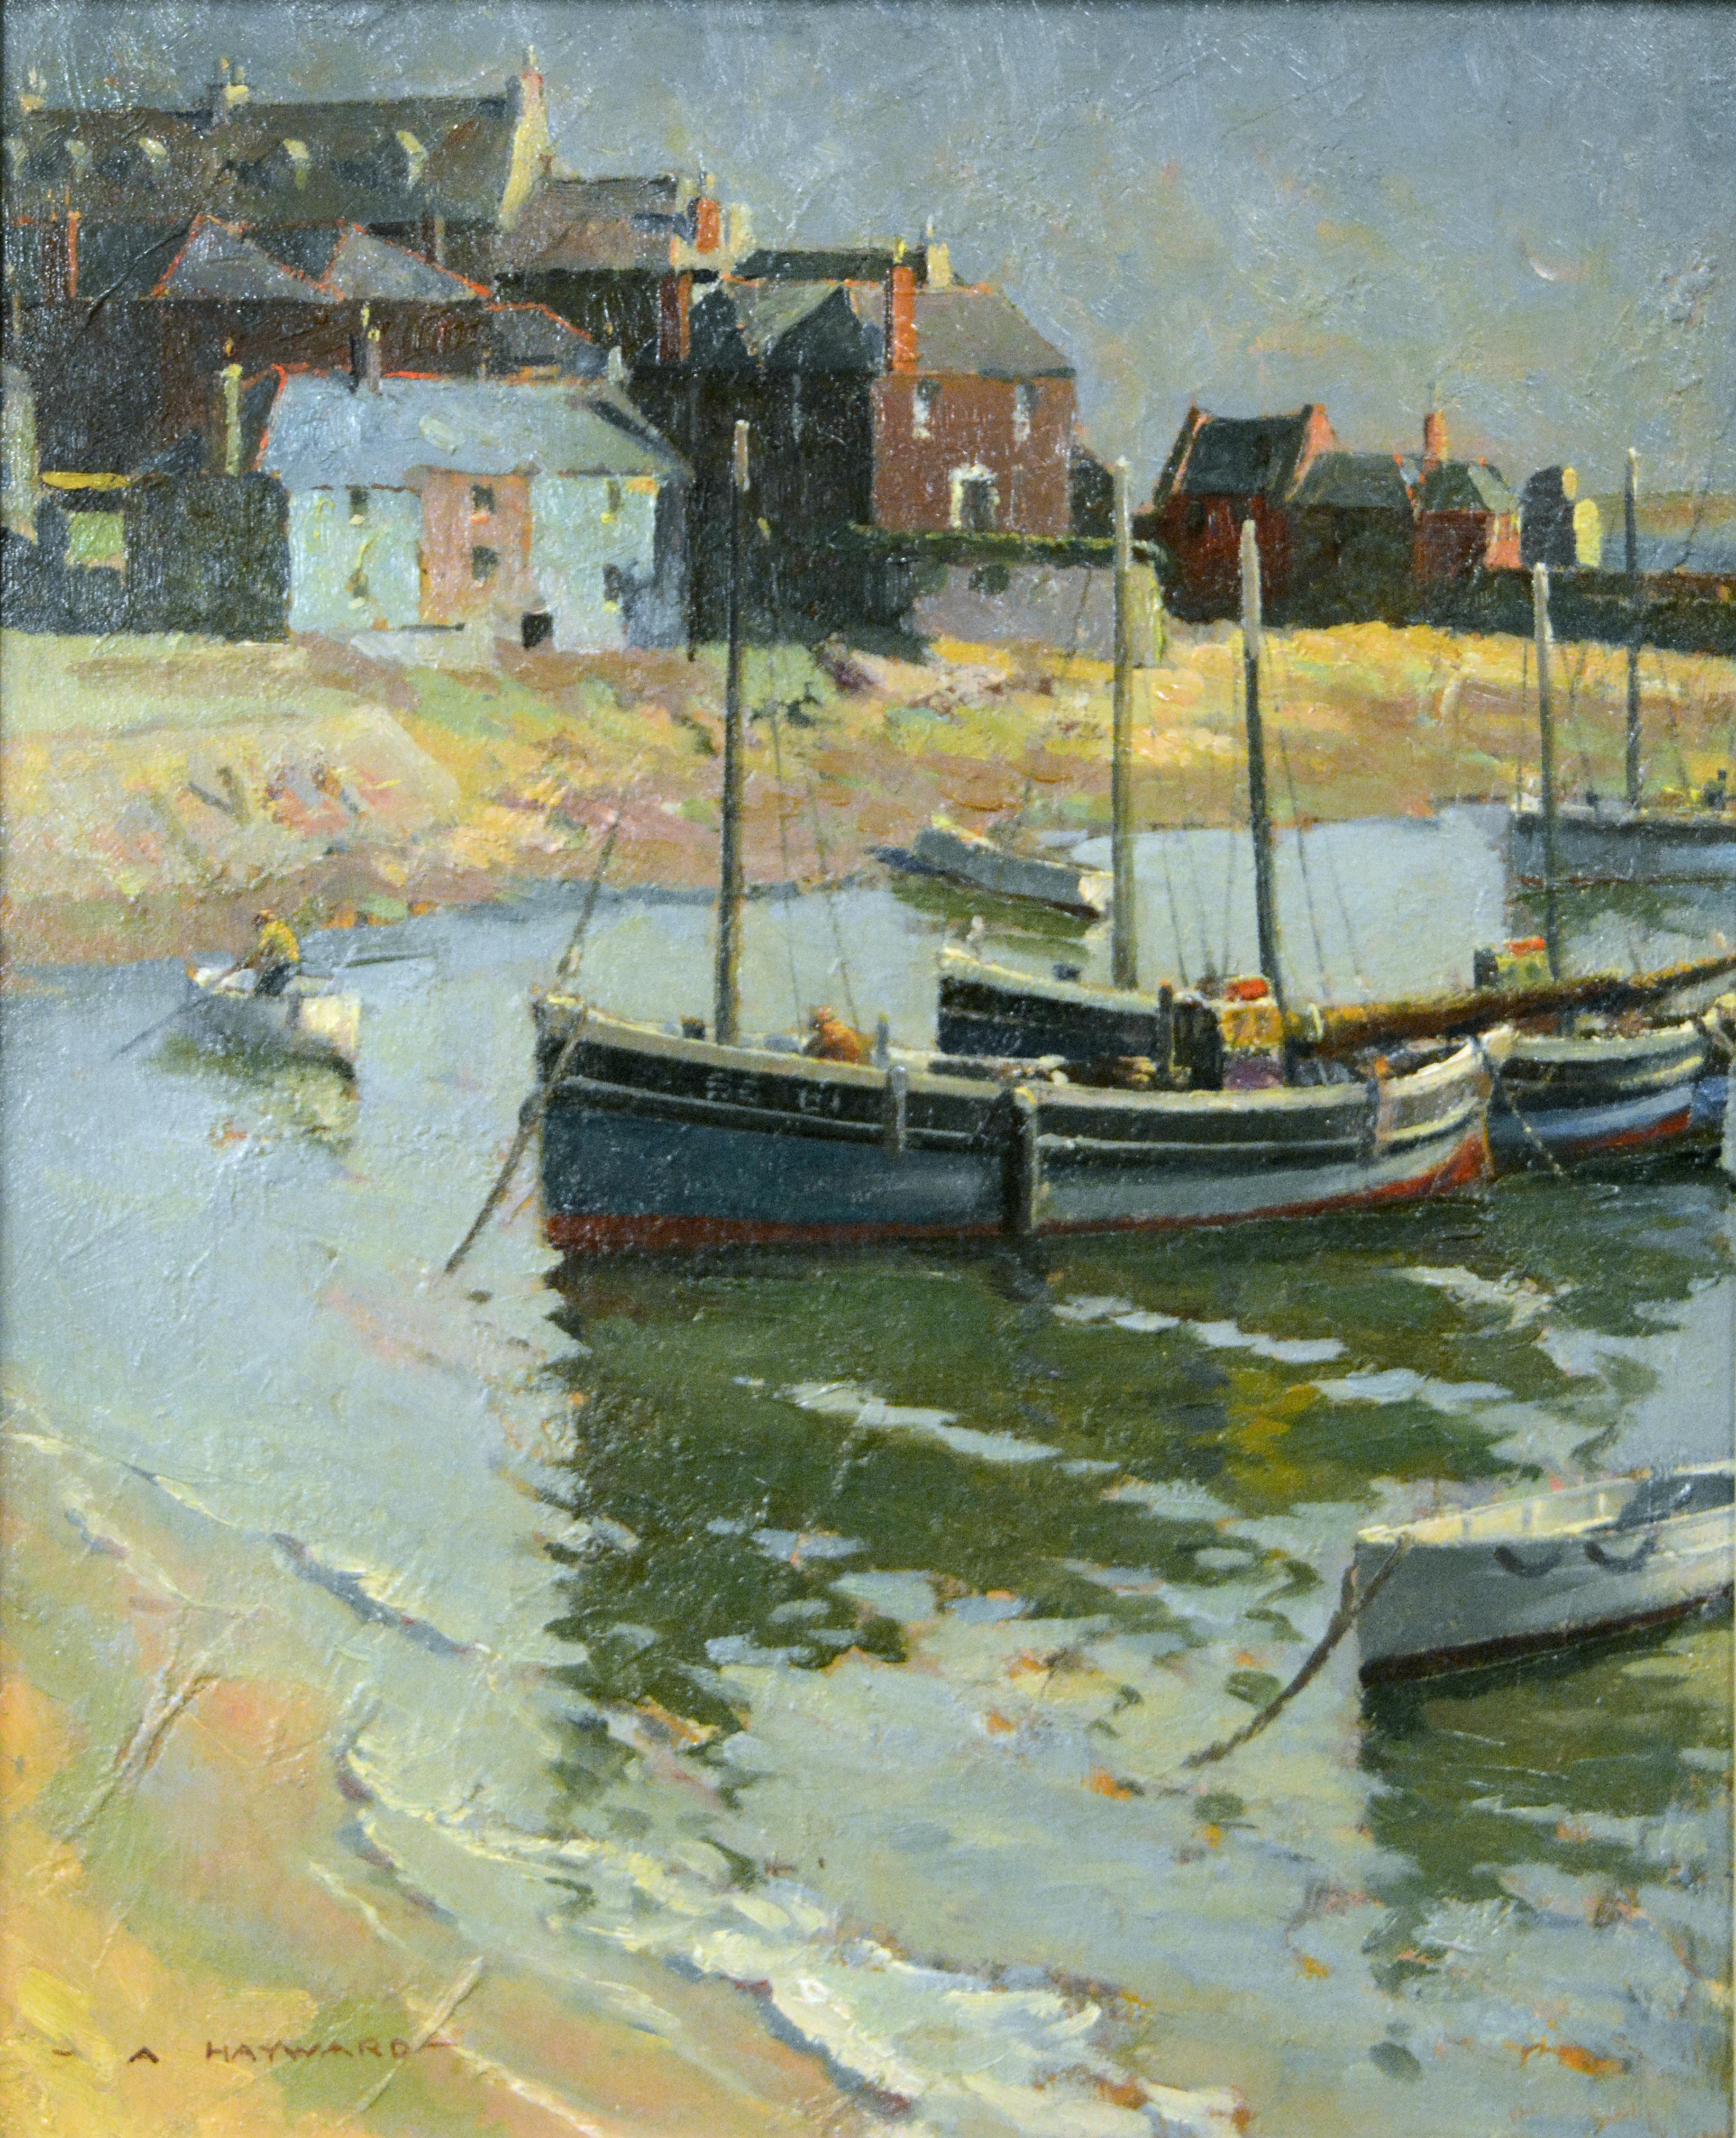 Arthur George Hayward Landscape Painting - Harbor Landscape of fishing boats, "Morning at St. Ives"